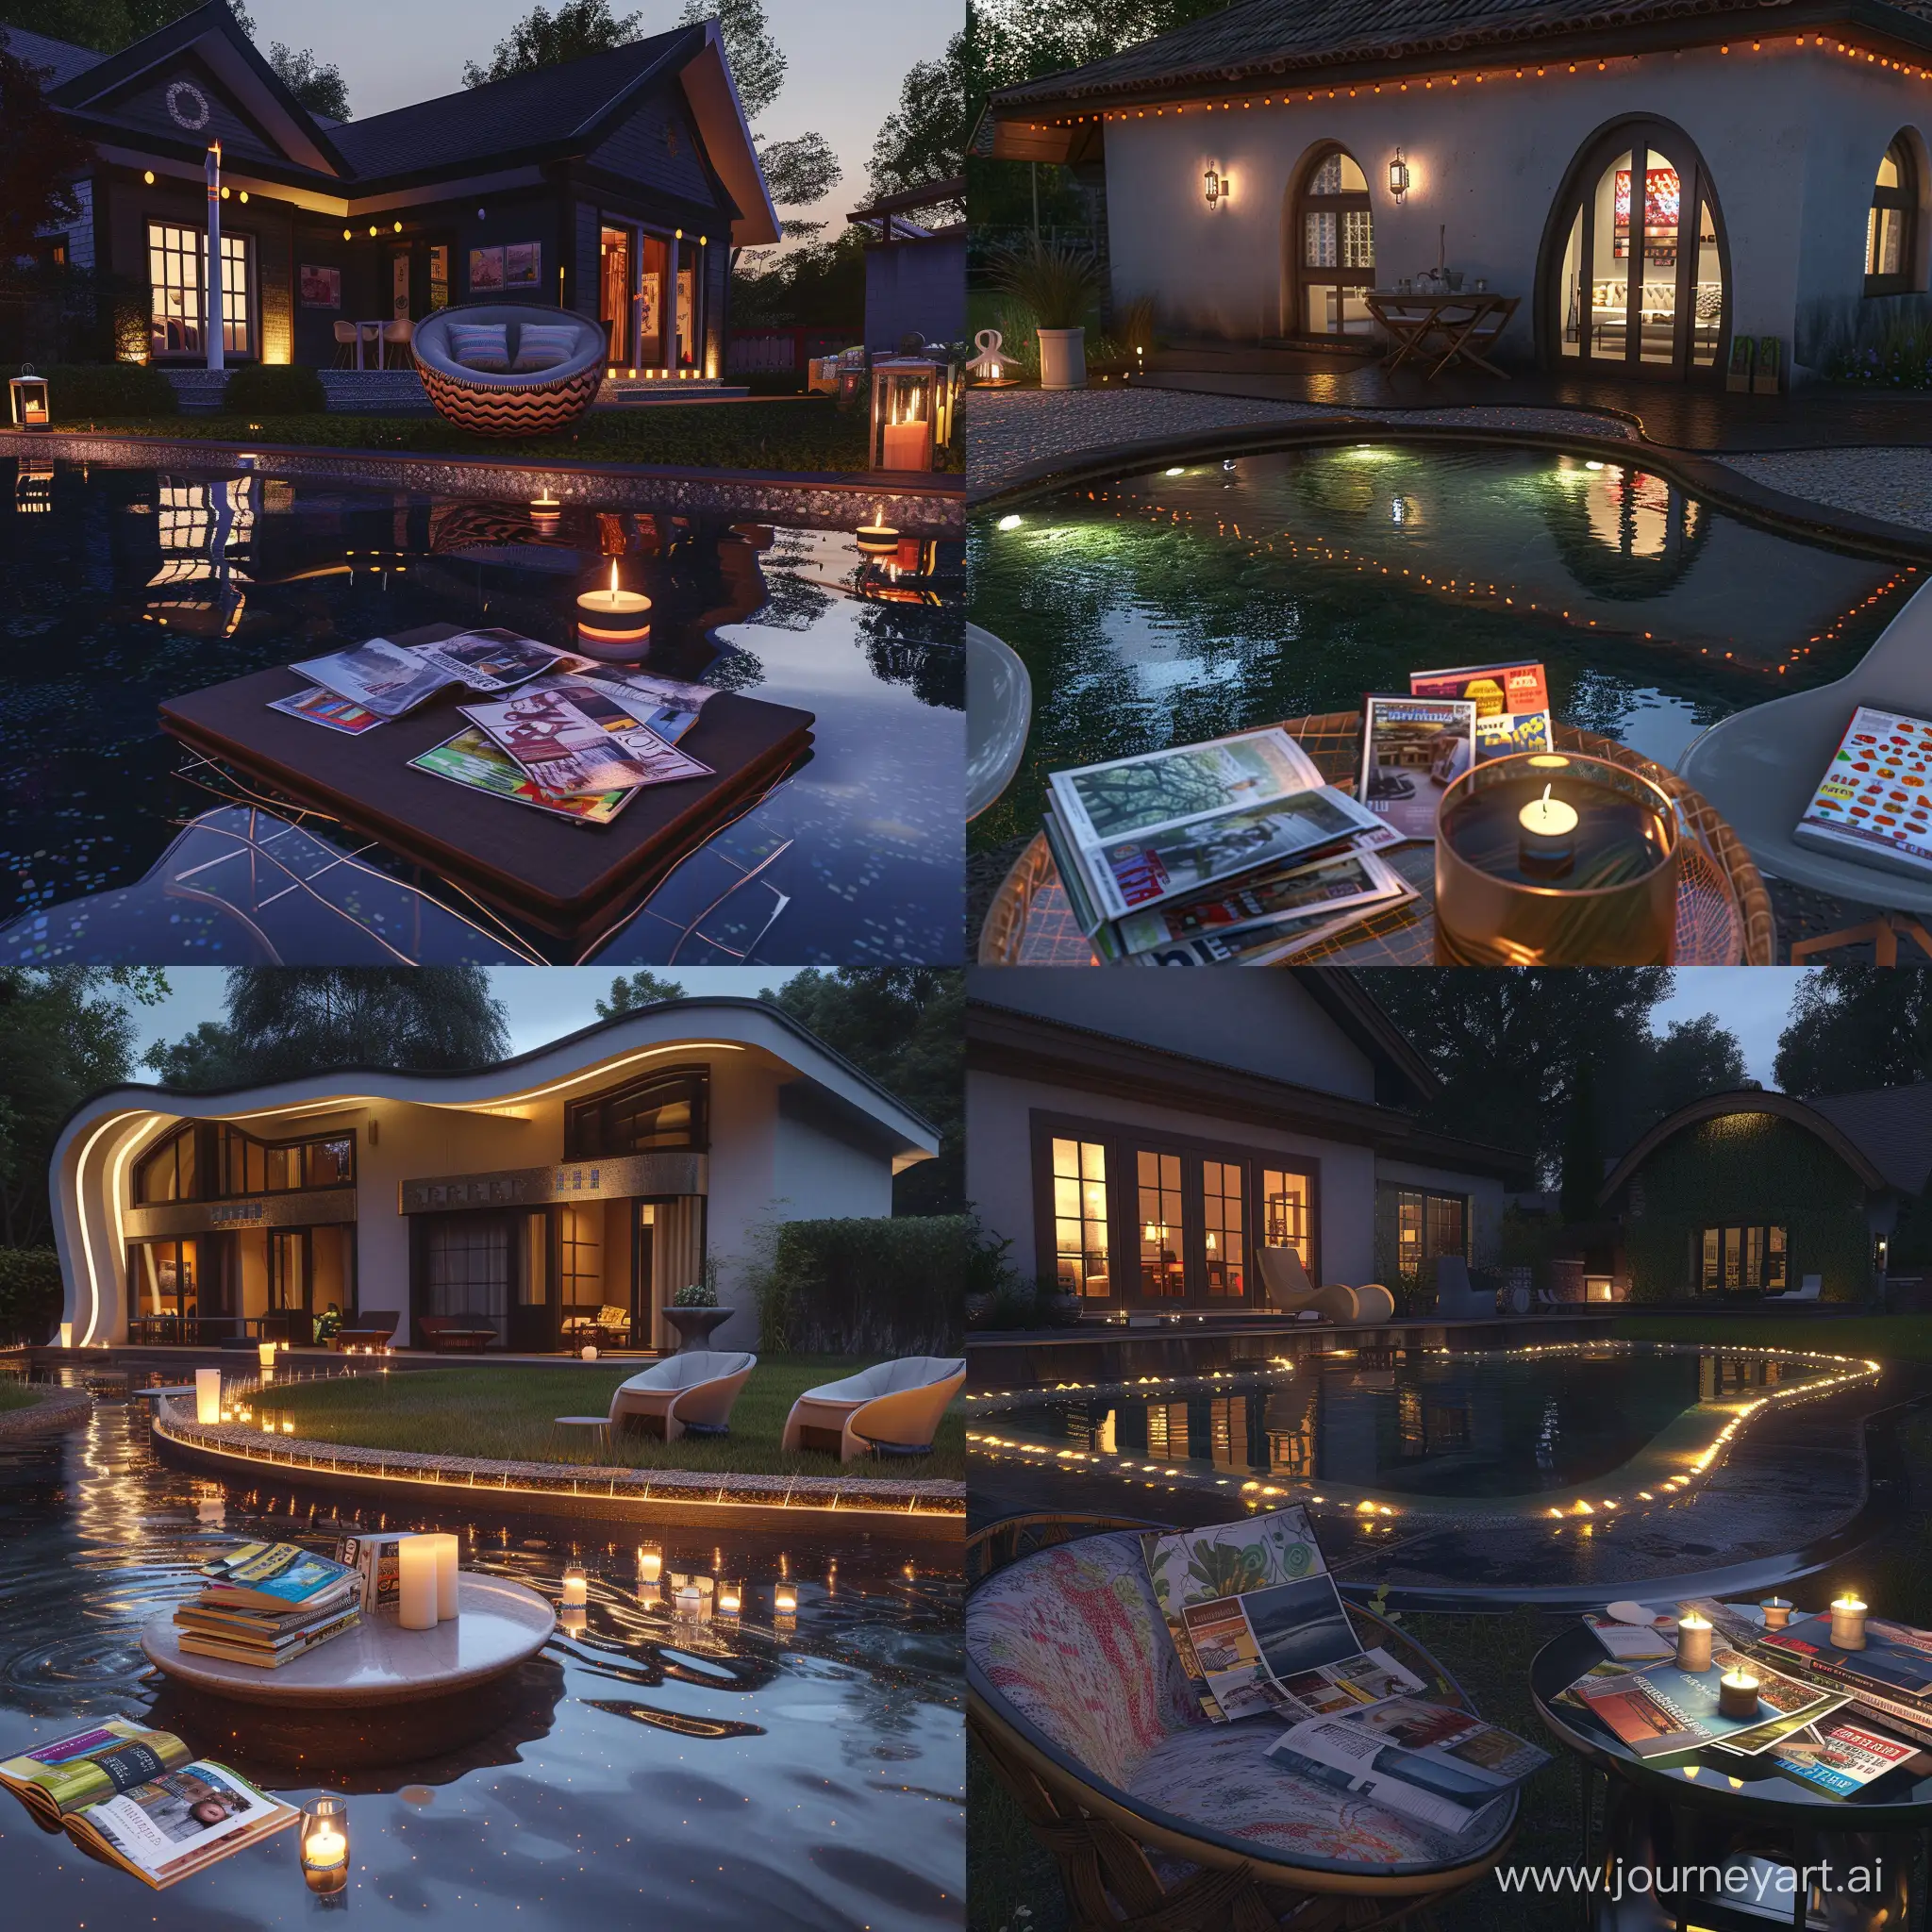 Elegant-American-House-with-Nighttime-Ambiance-and-Serene-Backyard-Pool